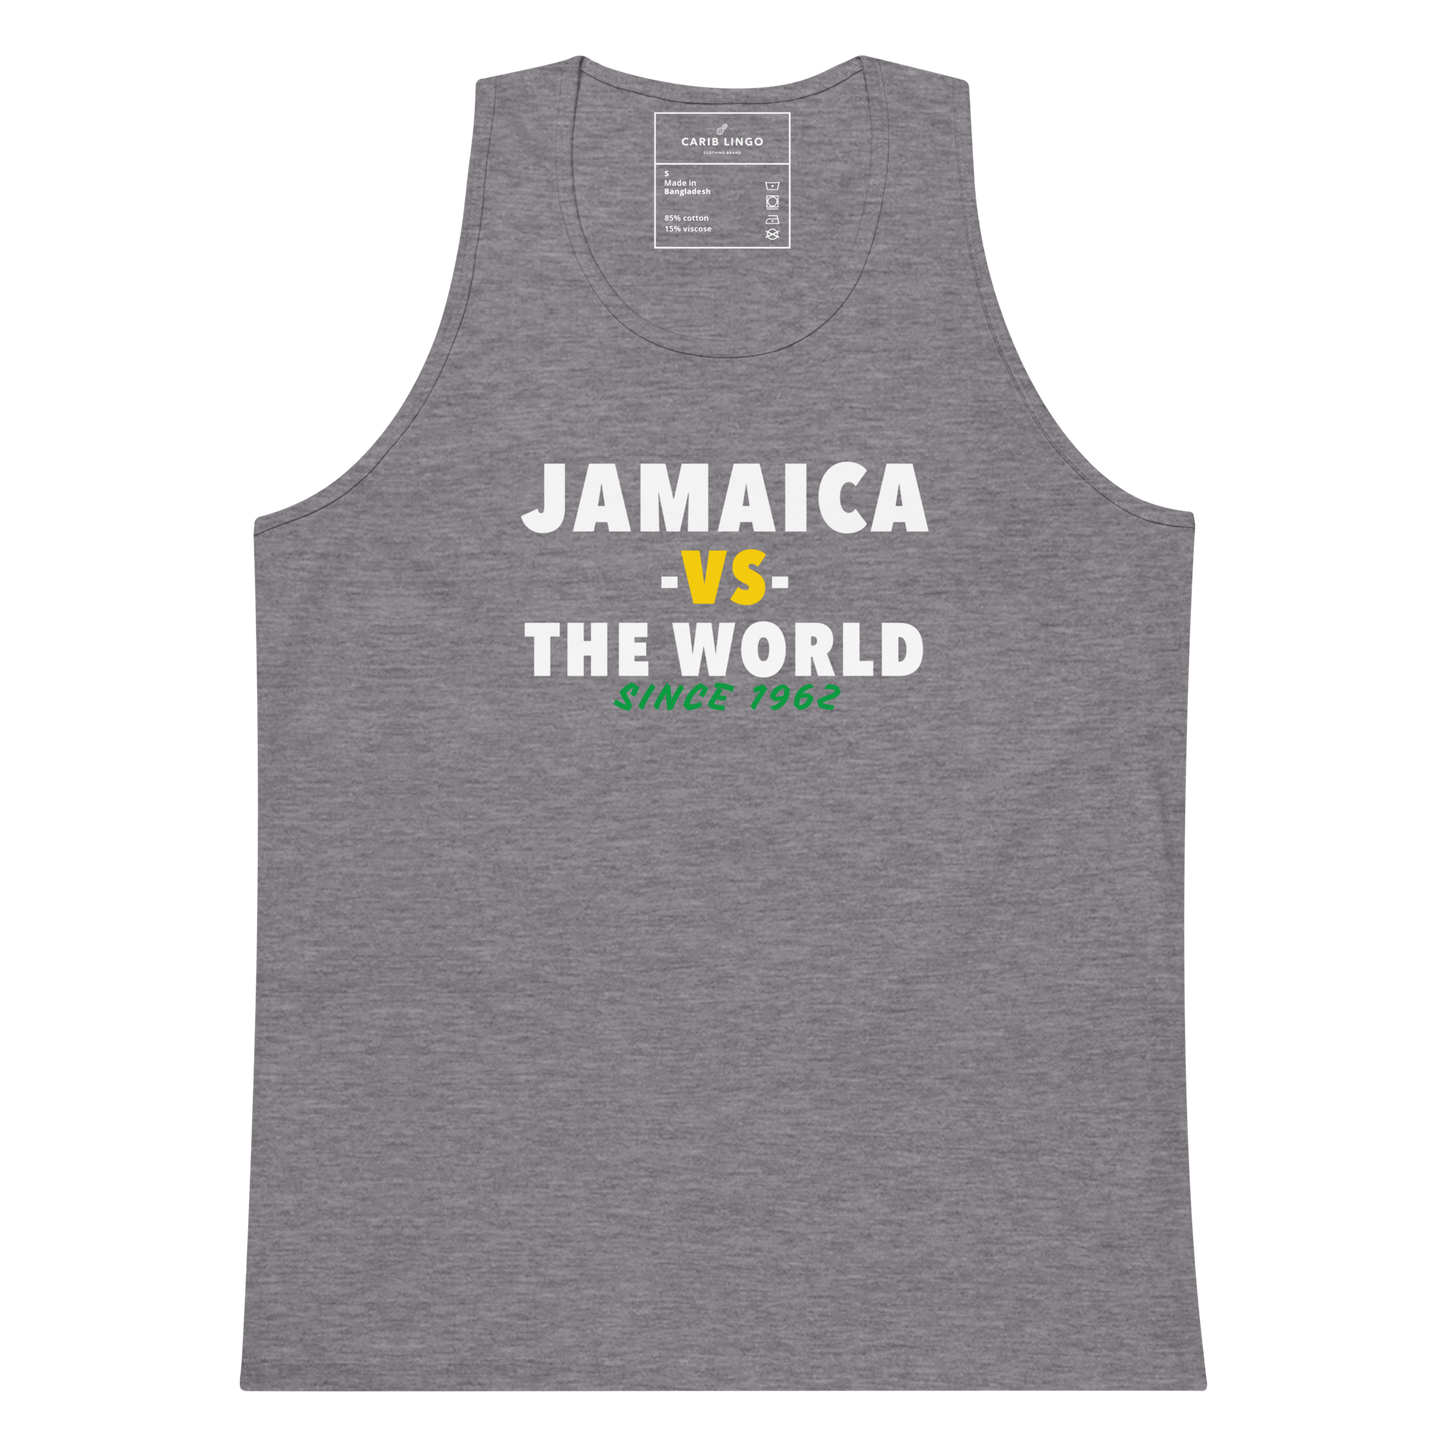 Jamaica -vs- The World Men’s premium tank top